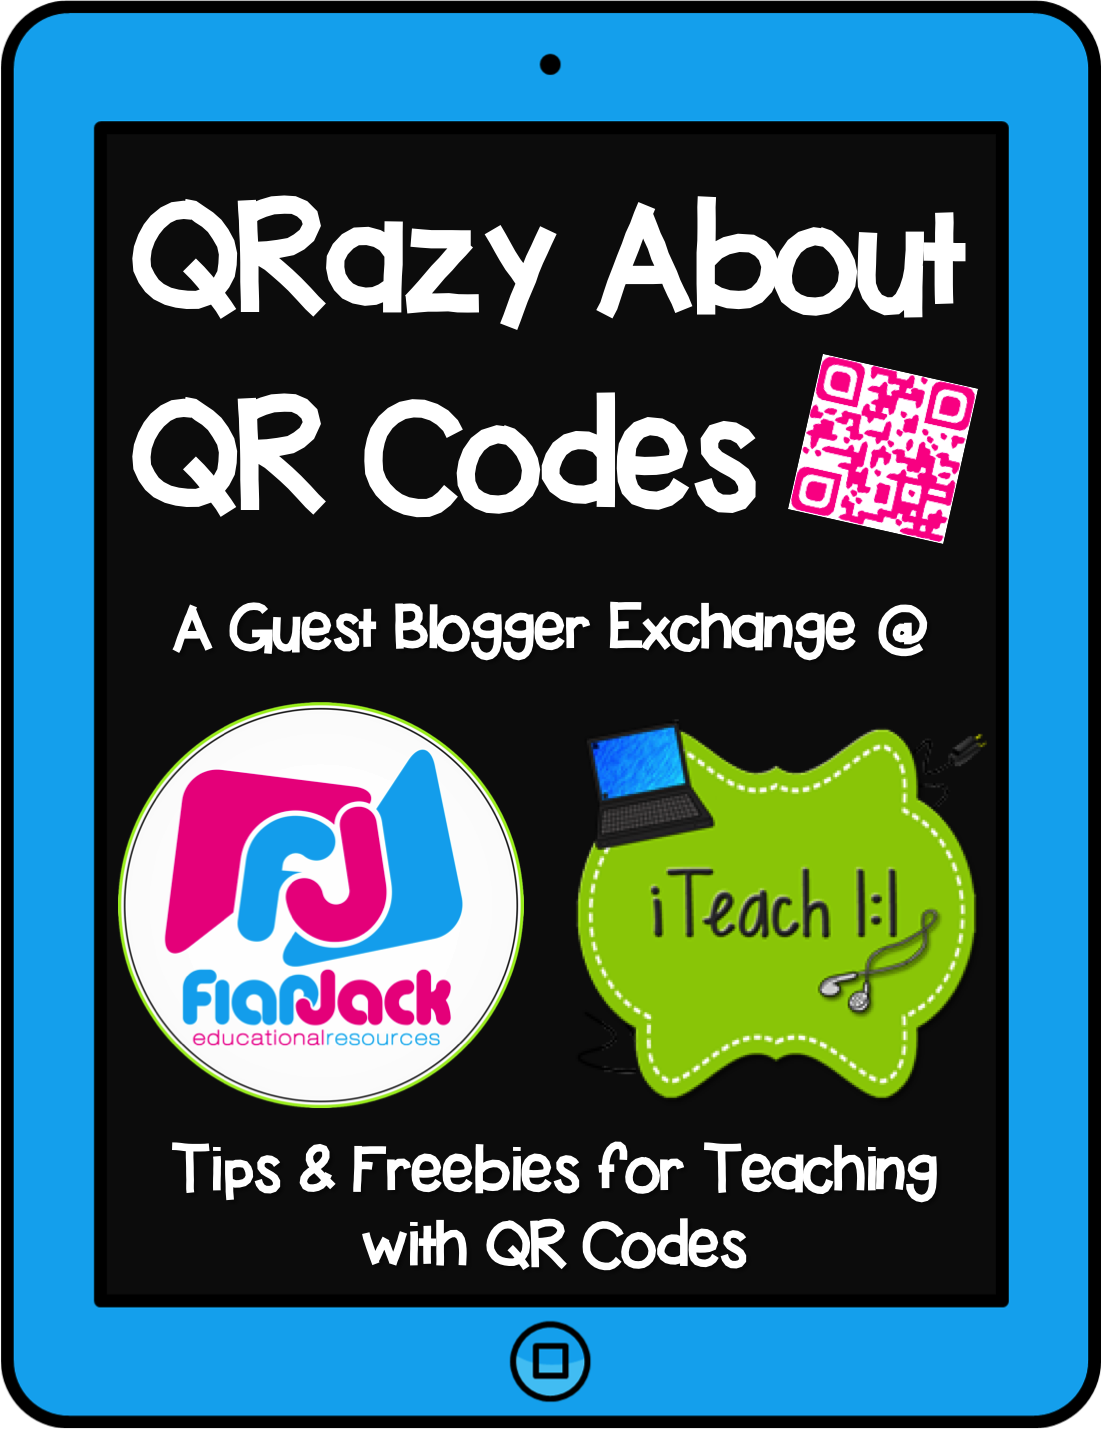 iTeach 1:1: QRazy About QR Codes Guest Blogger